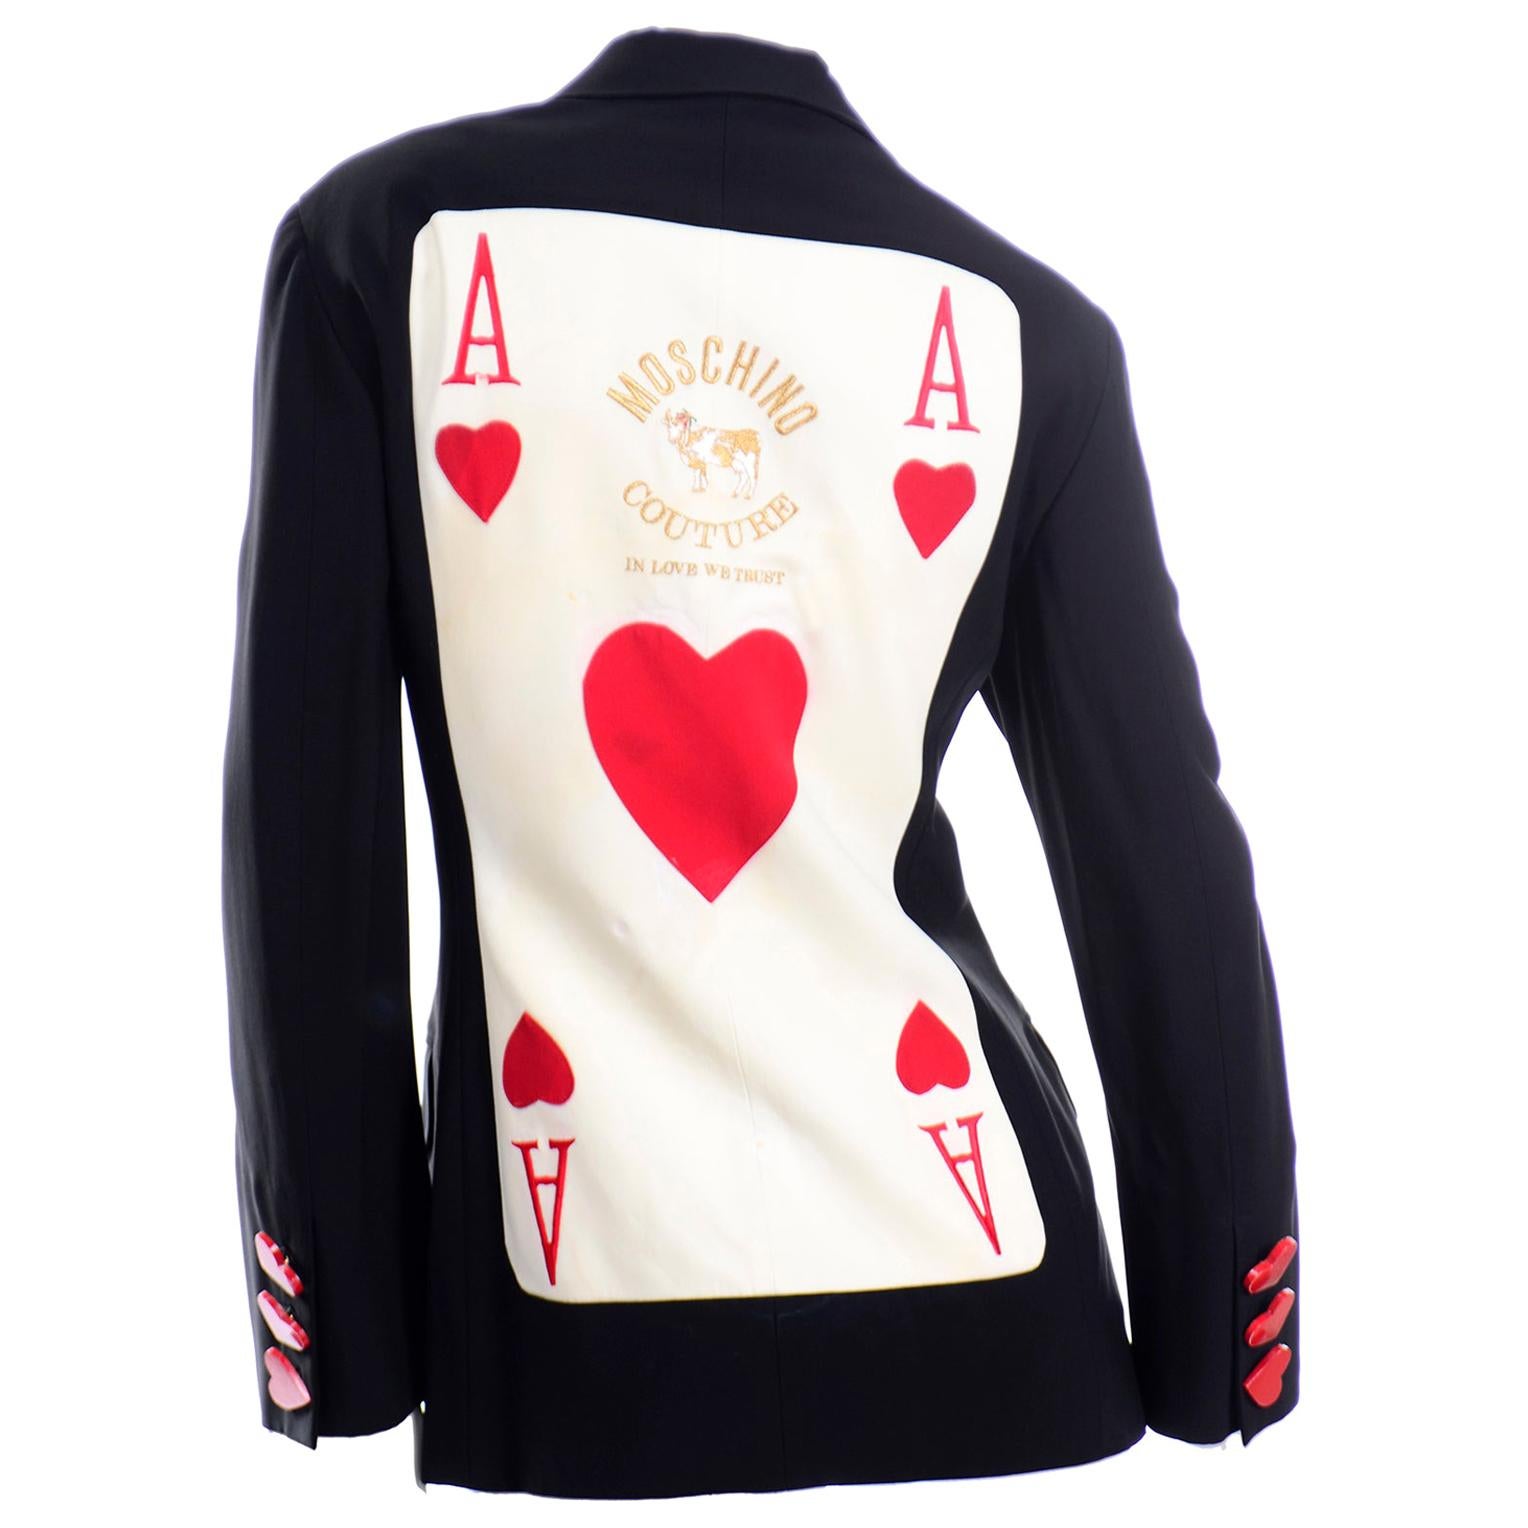 Rare Franco Moschino Couture Juvant Ace of Hearts Blazer Jacket